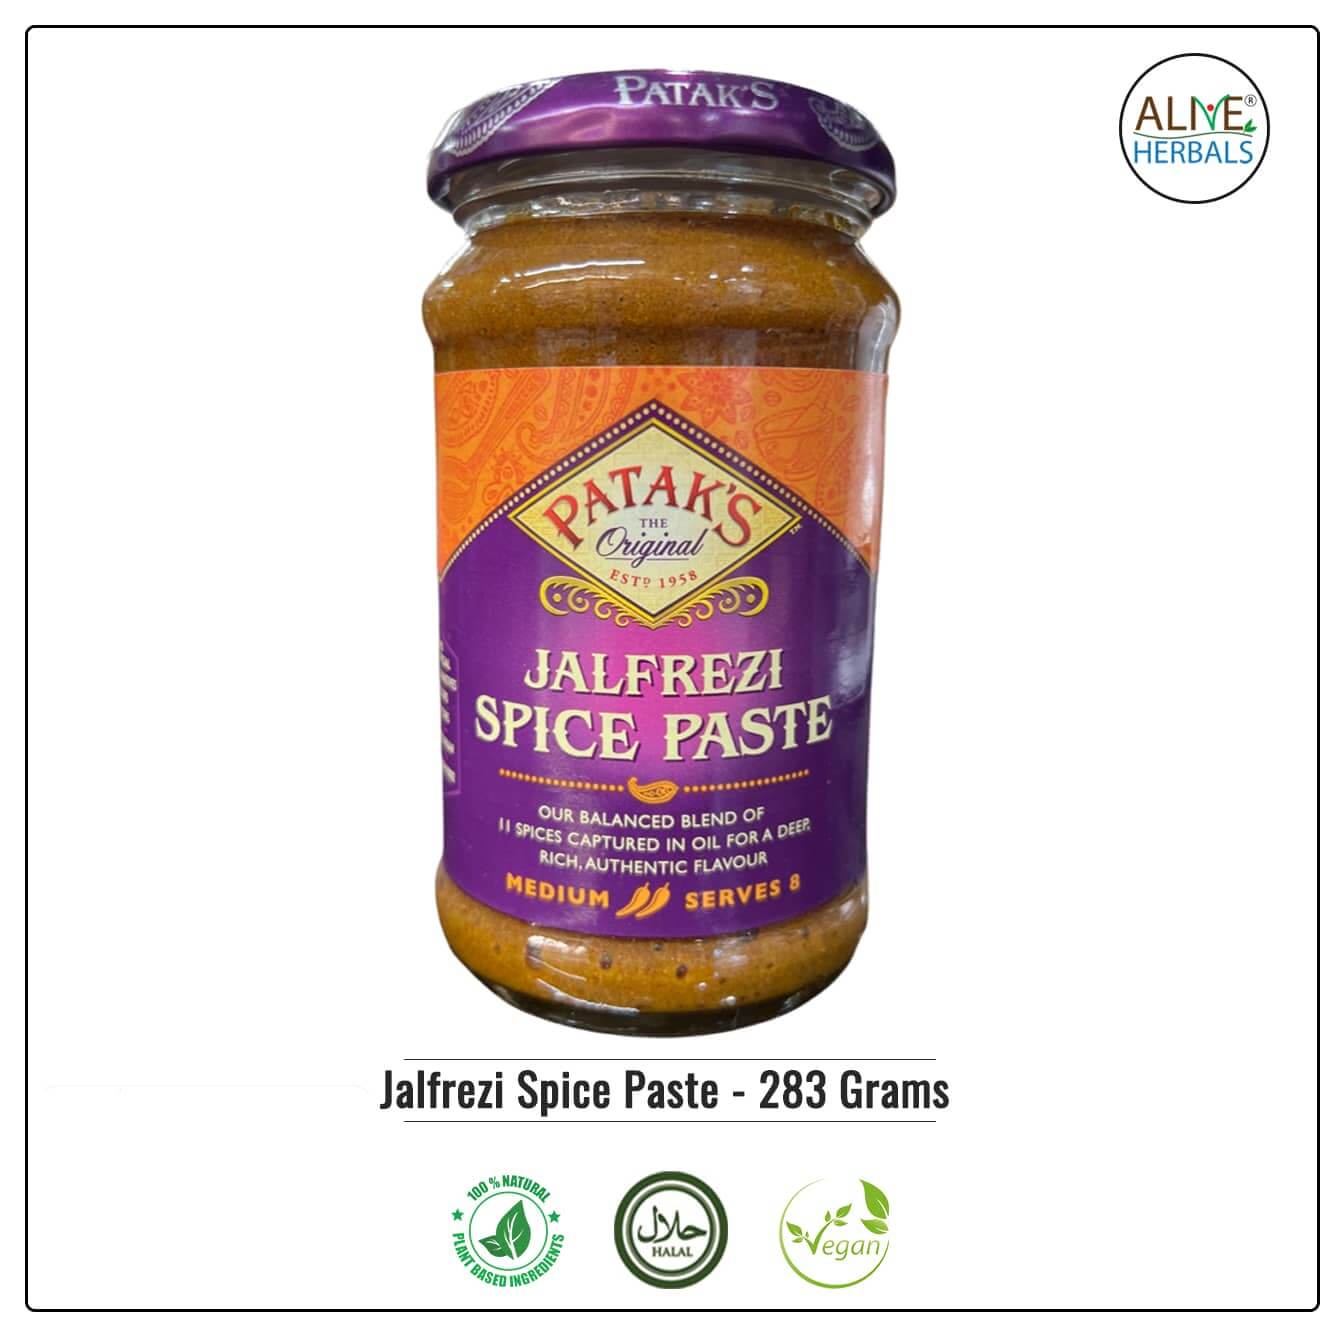 Jalfrezi Spice Paste - Alive Herbals